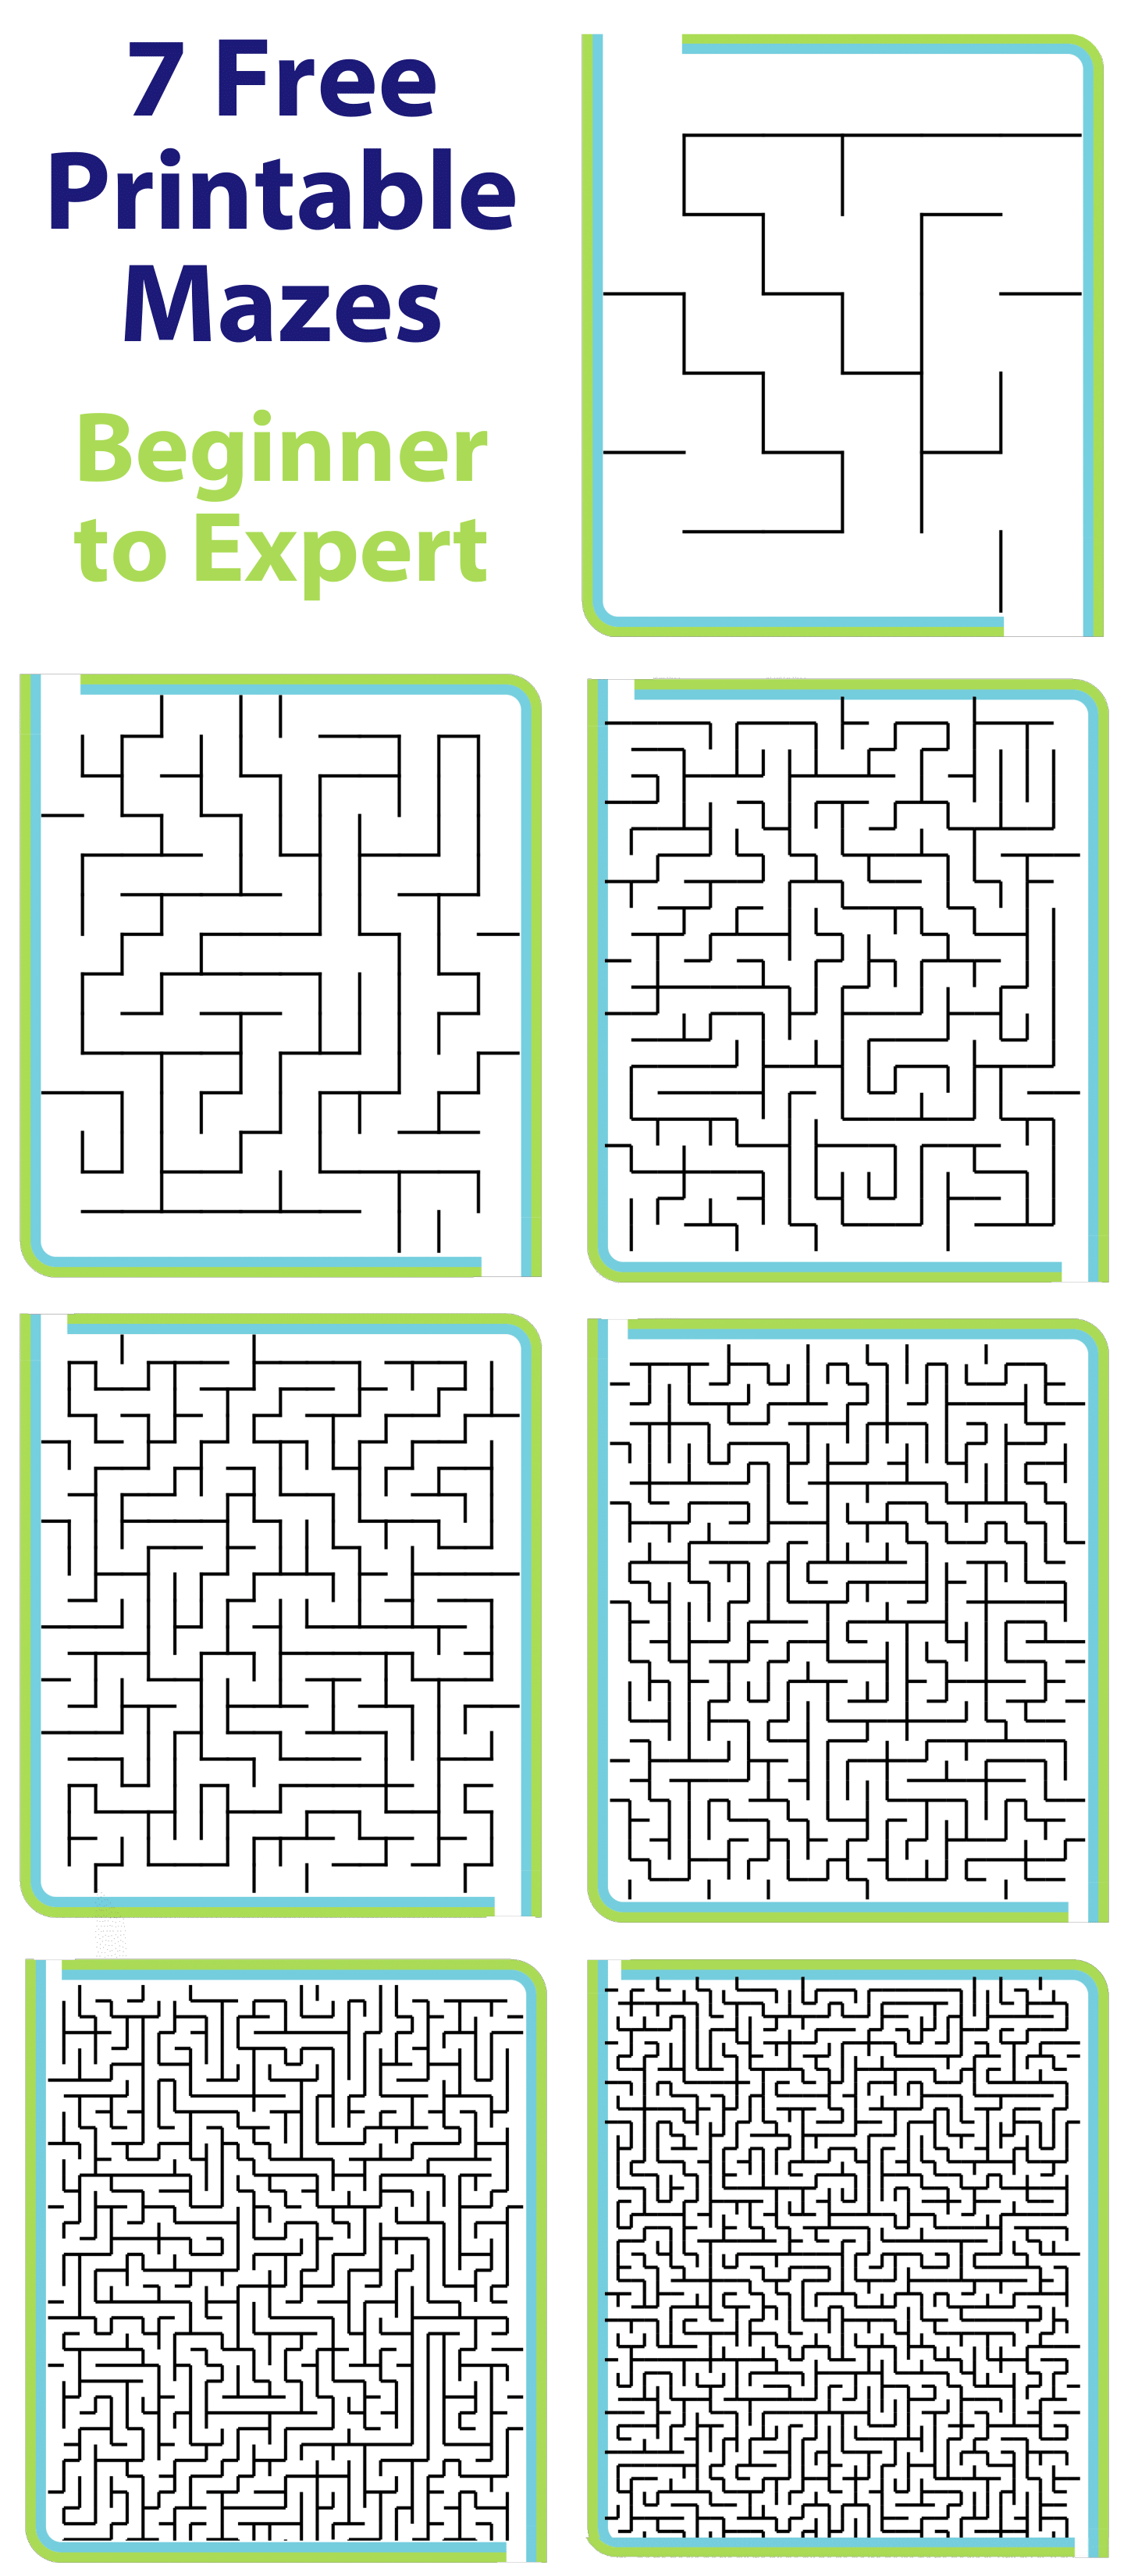 7 free printable mazes for kids, beginner to expert